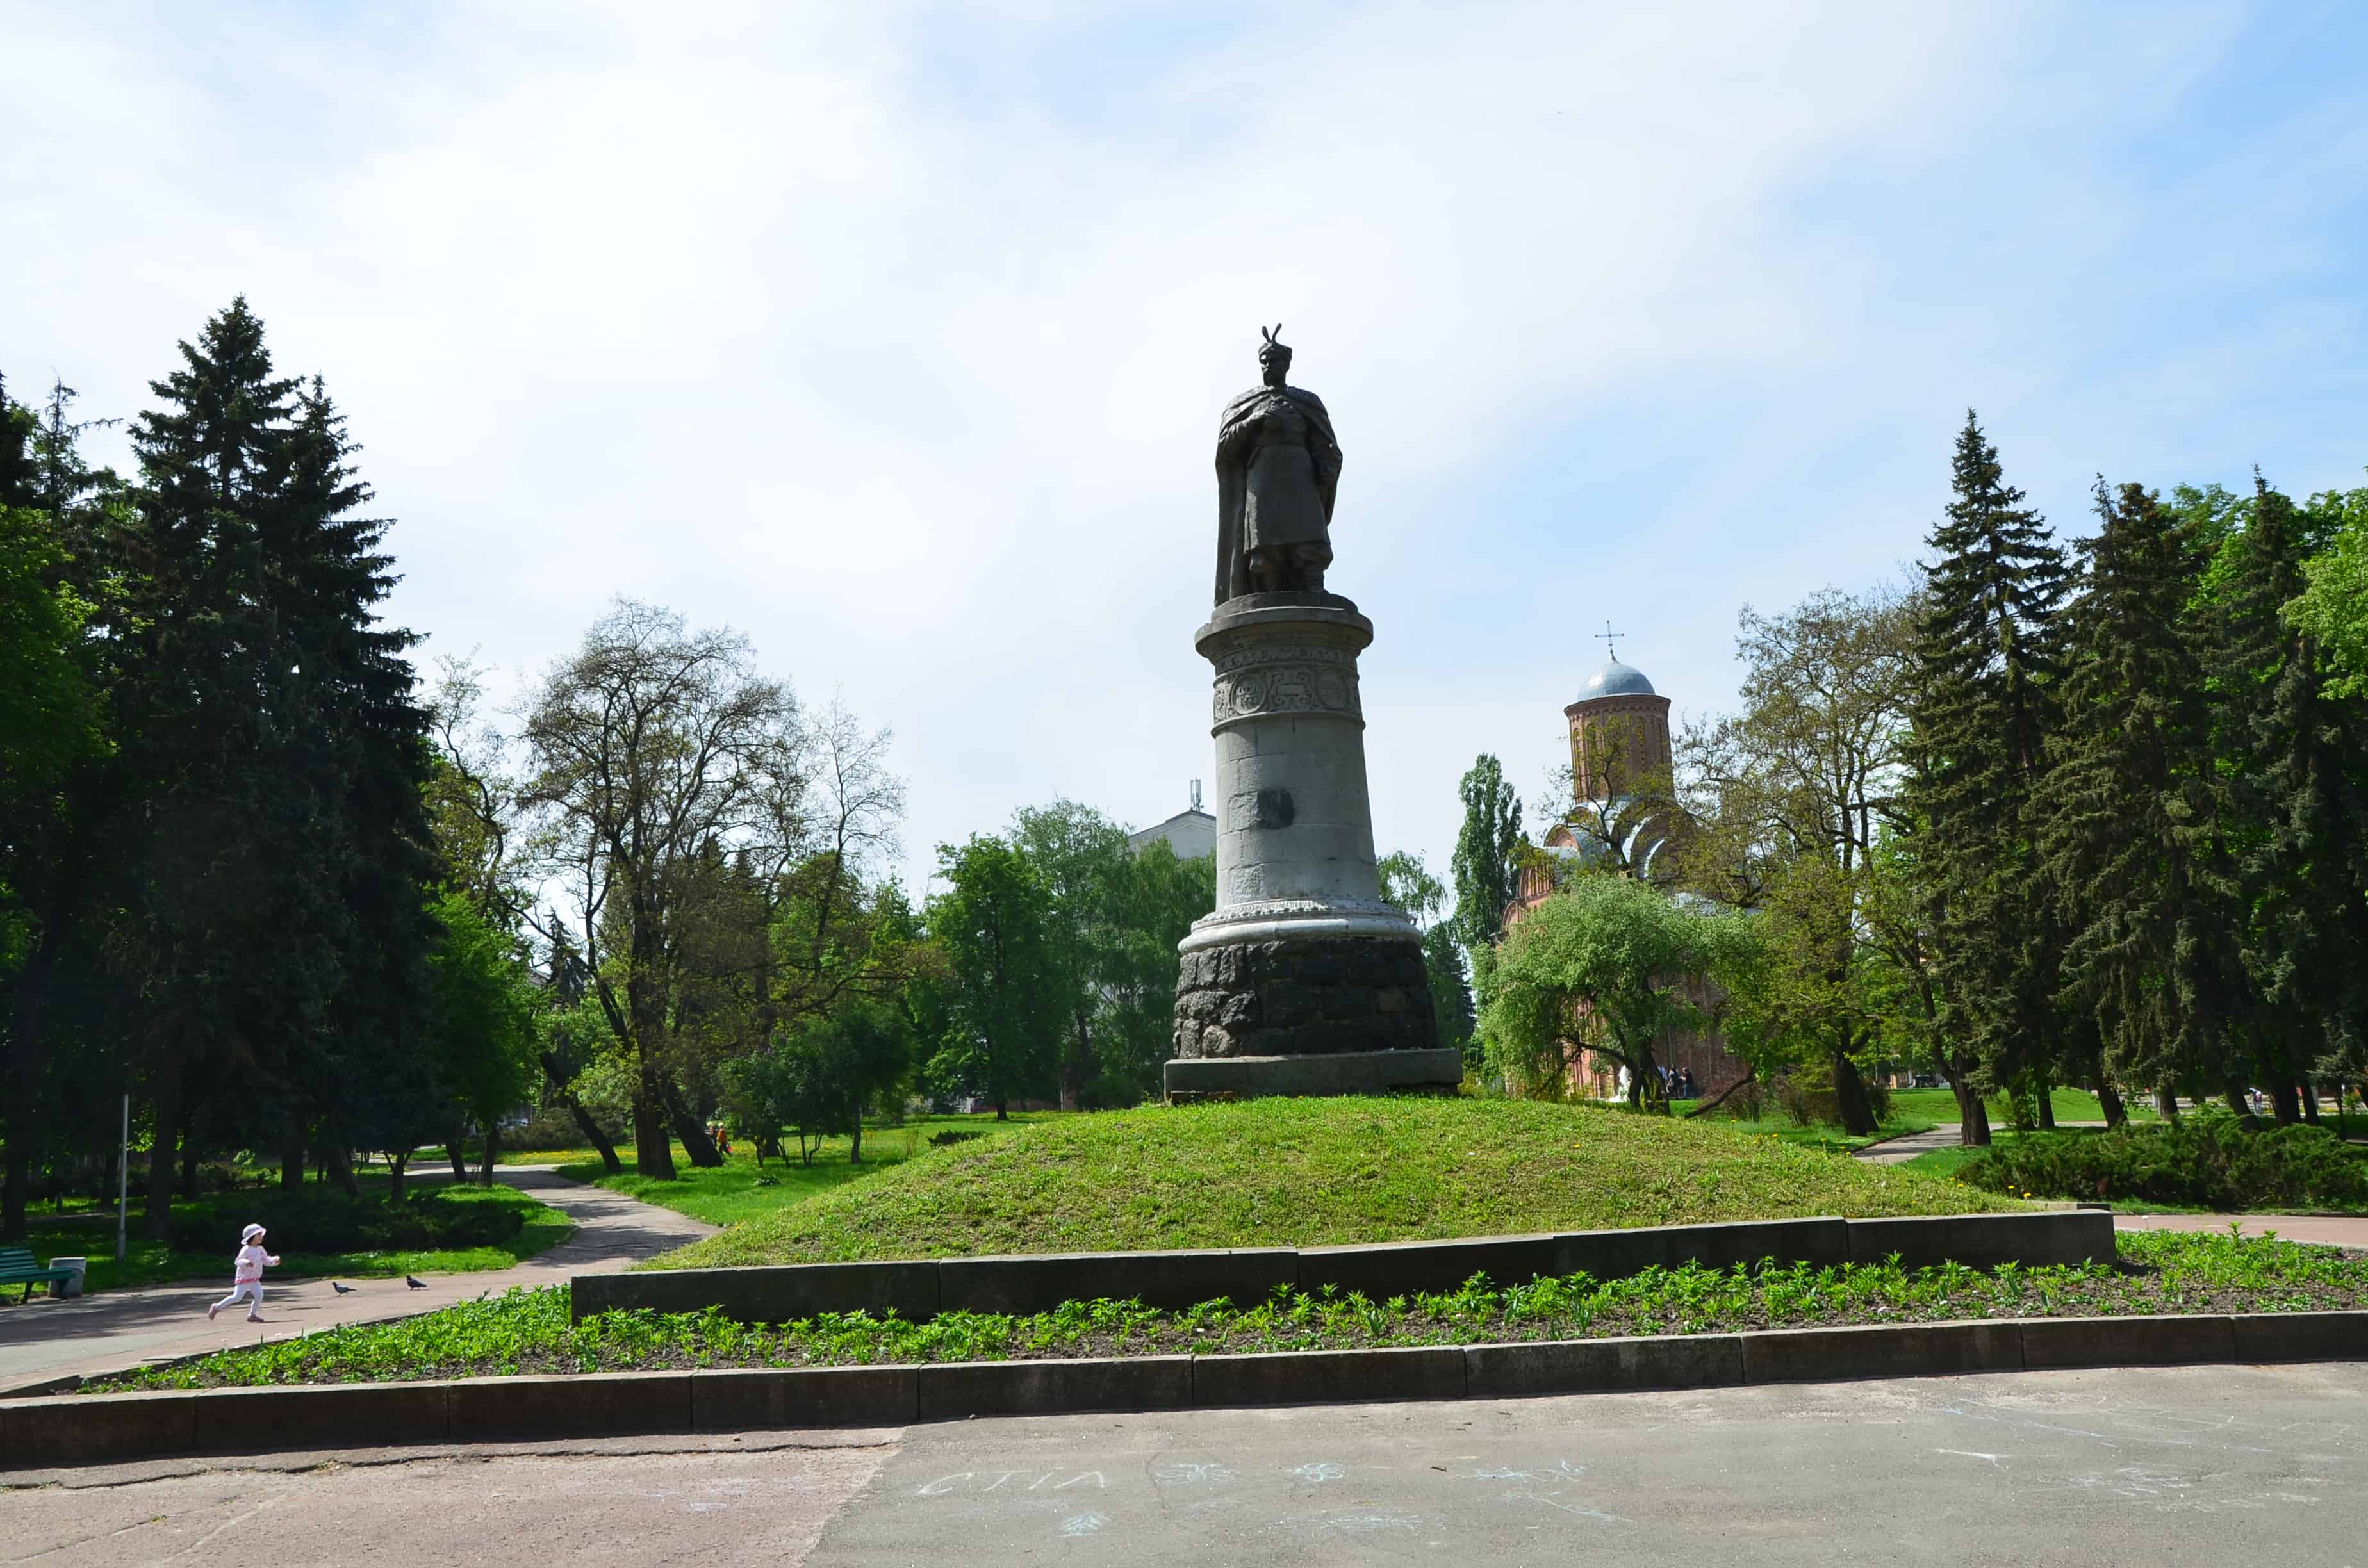 Bohdan Khmelnystky Square in Chernihiv, Ukraine